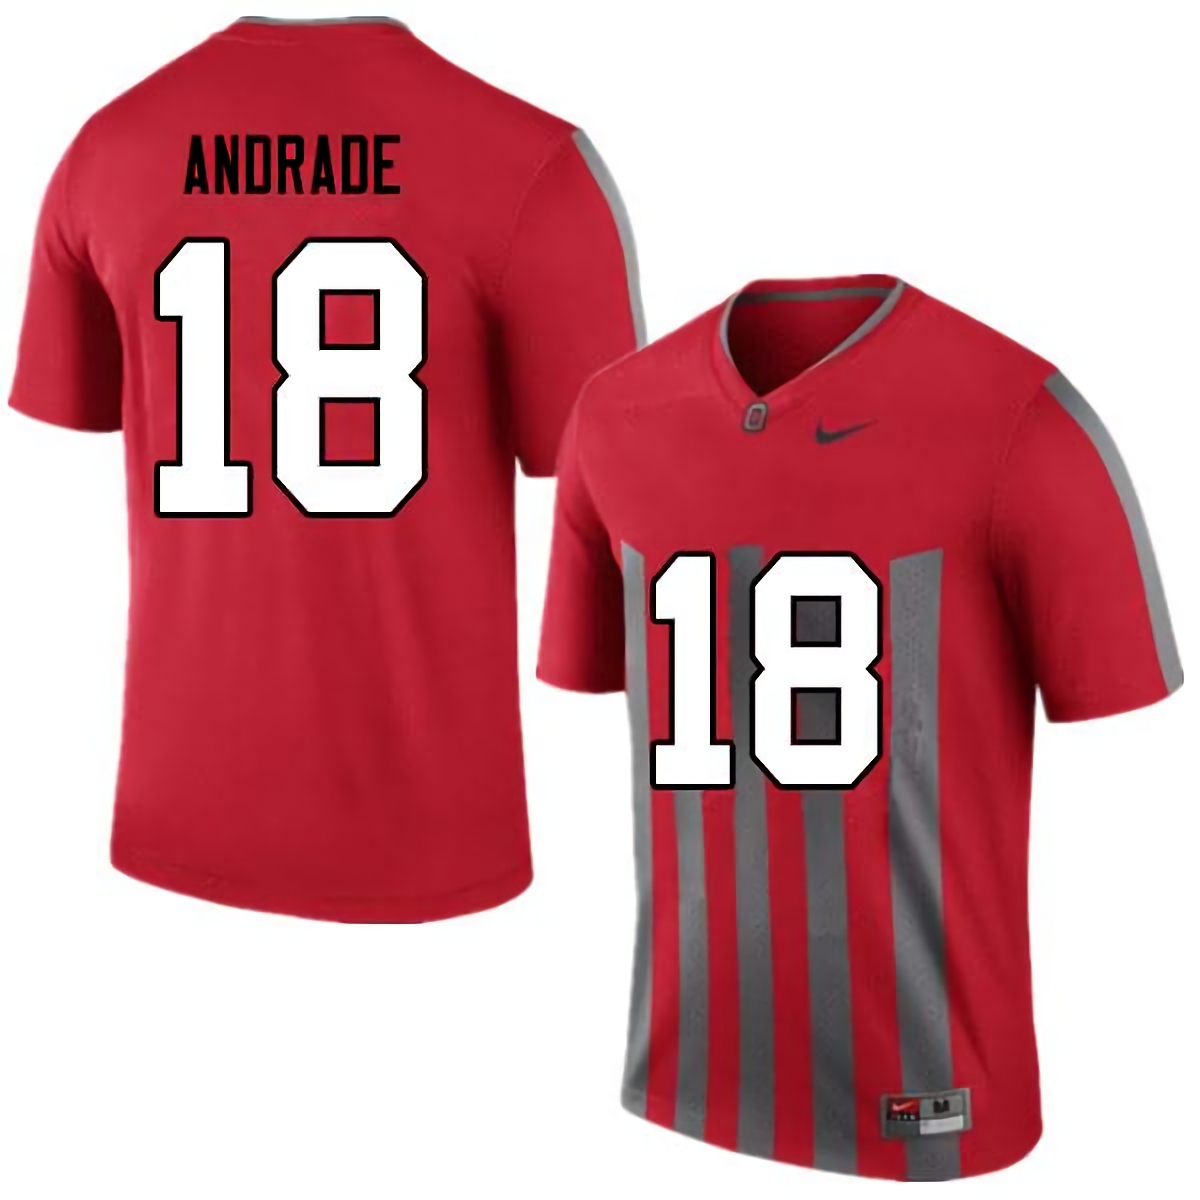 J.P. Andrade Ohio State Buckeyes Men's NCAA #18 Nike Retro College Stitched Football Jersey JBT4156RJ